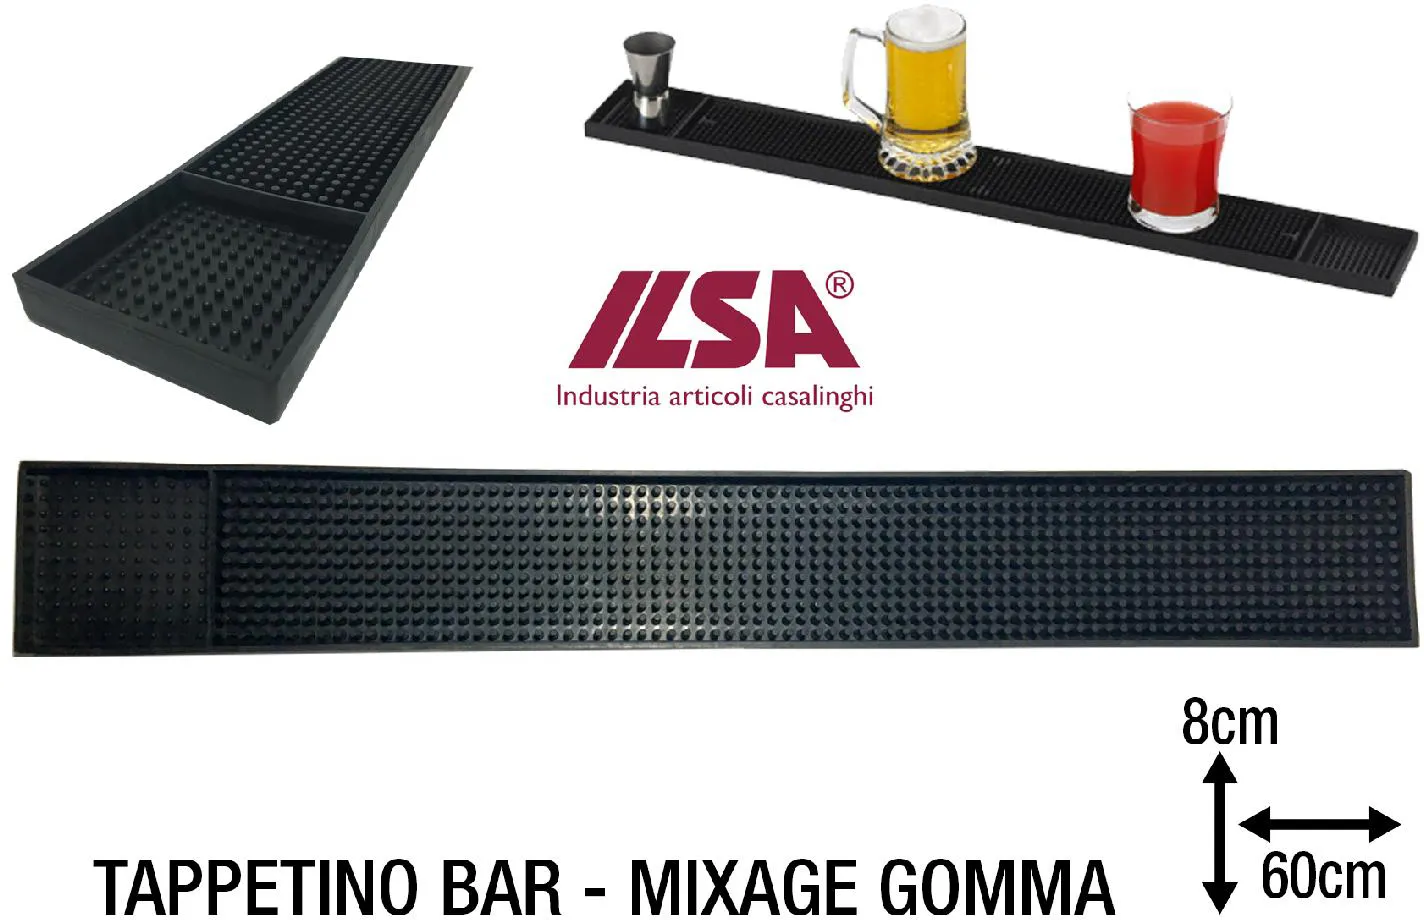 Tappetino Bar, Tappetino Cocktail con telaio in acciaio inox, 60 x 10 cm